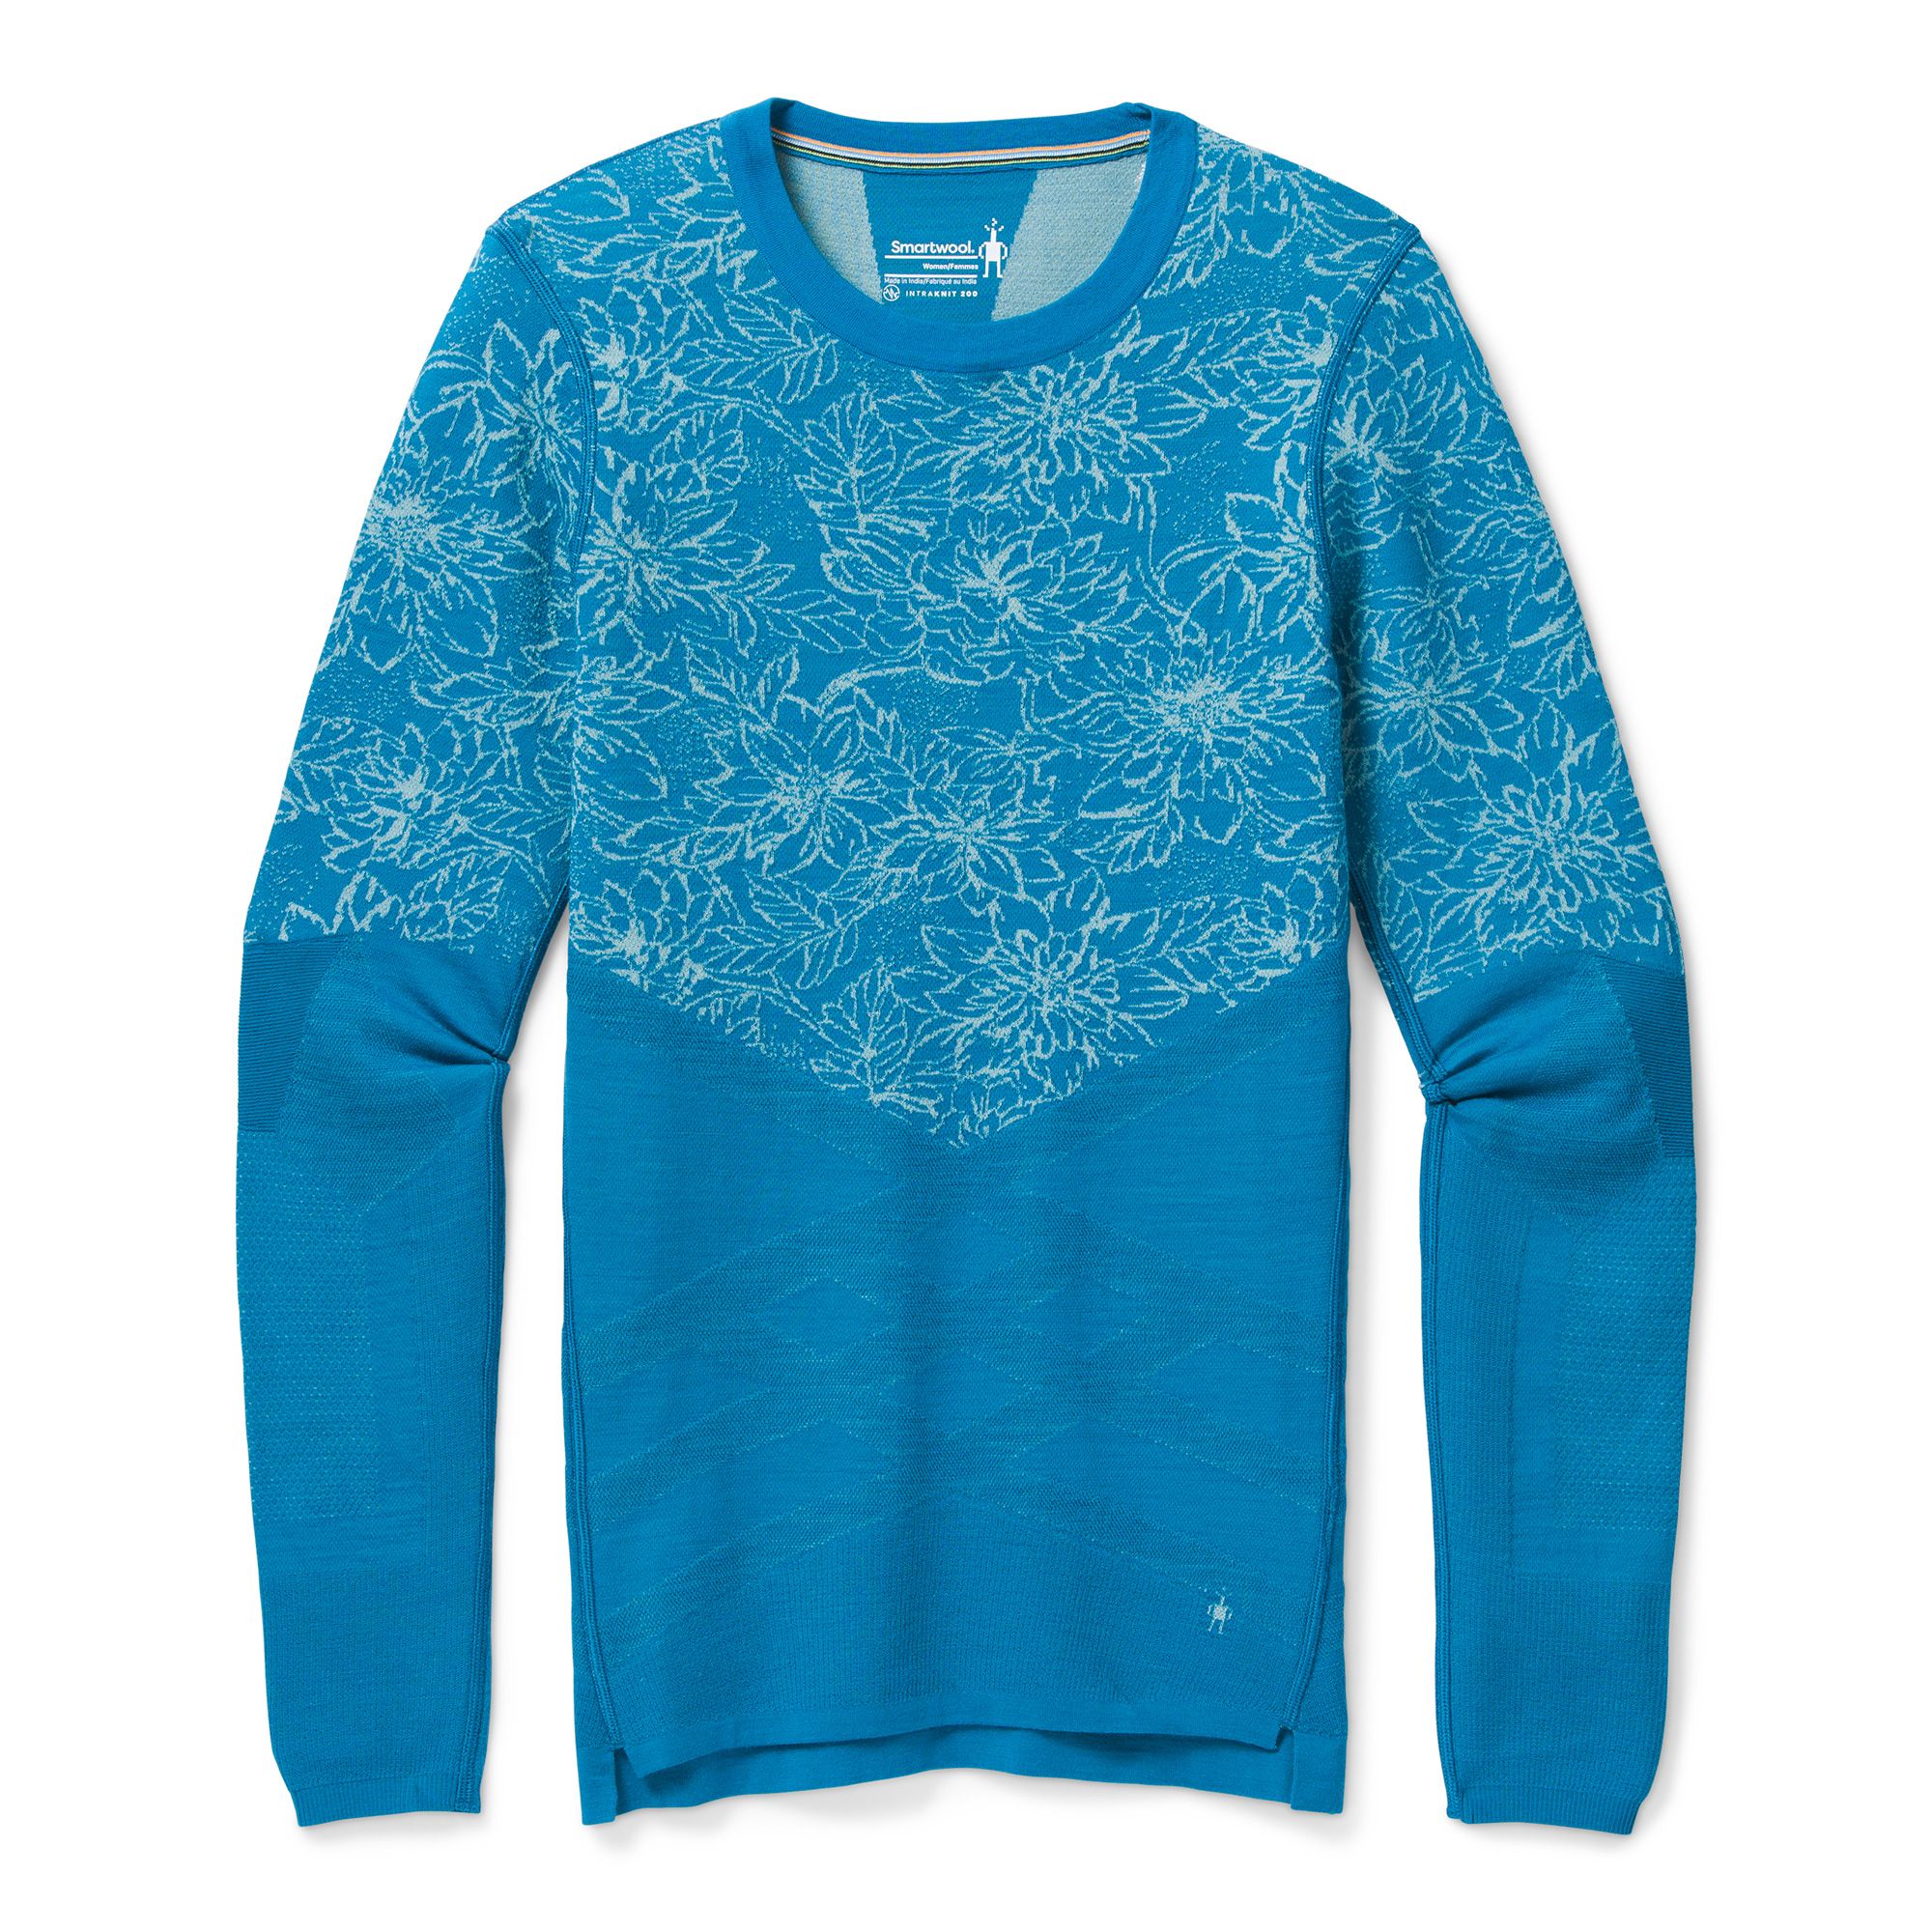 Merino Wool Pull Over Sweatshirt For Women - Woolx Bailey - Free Shipping